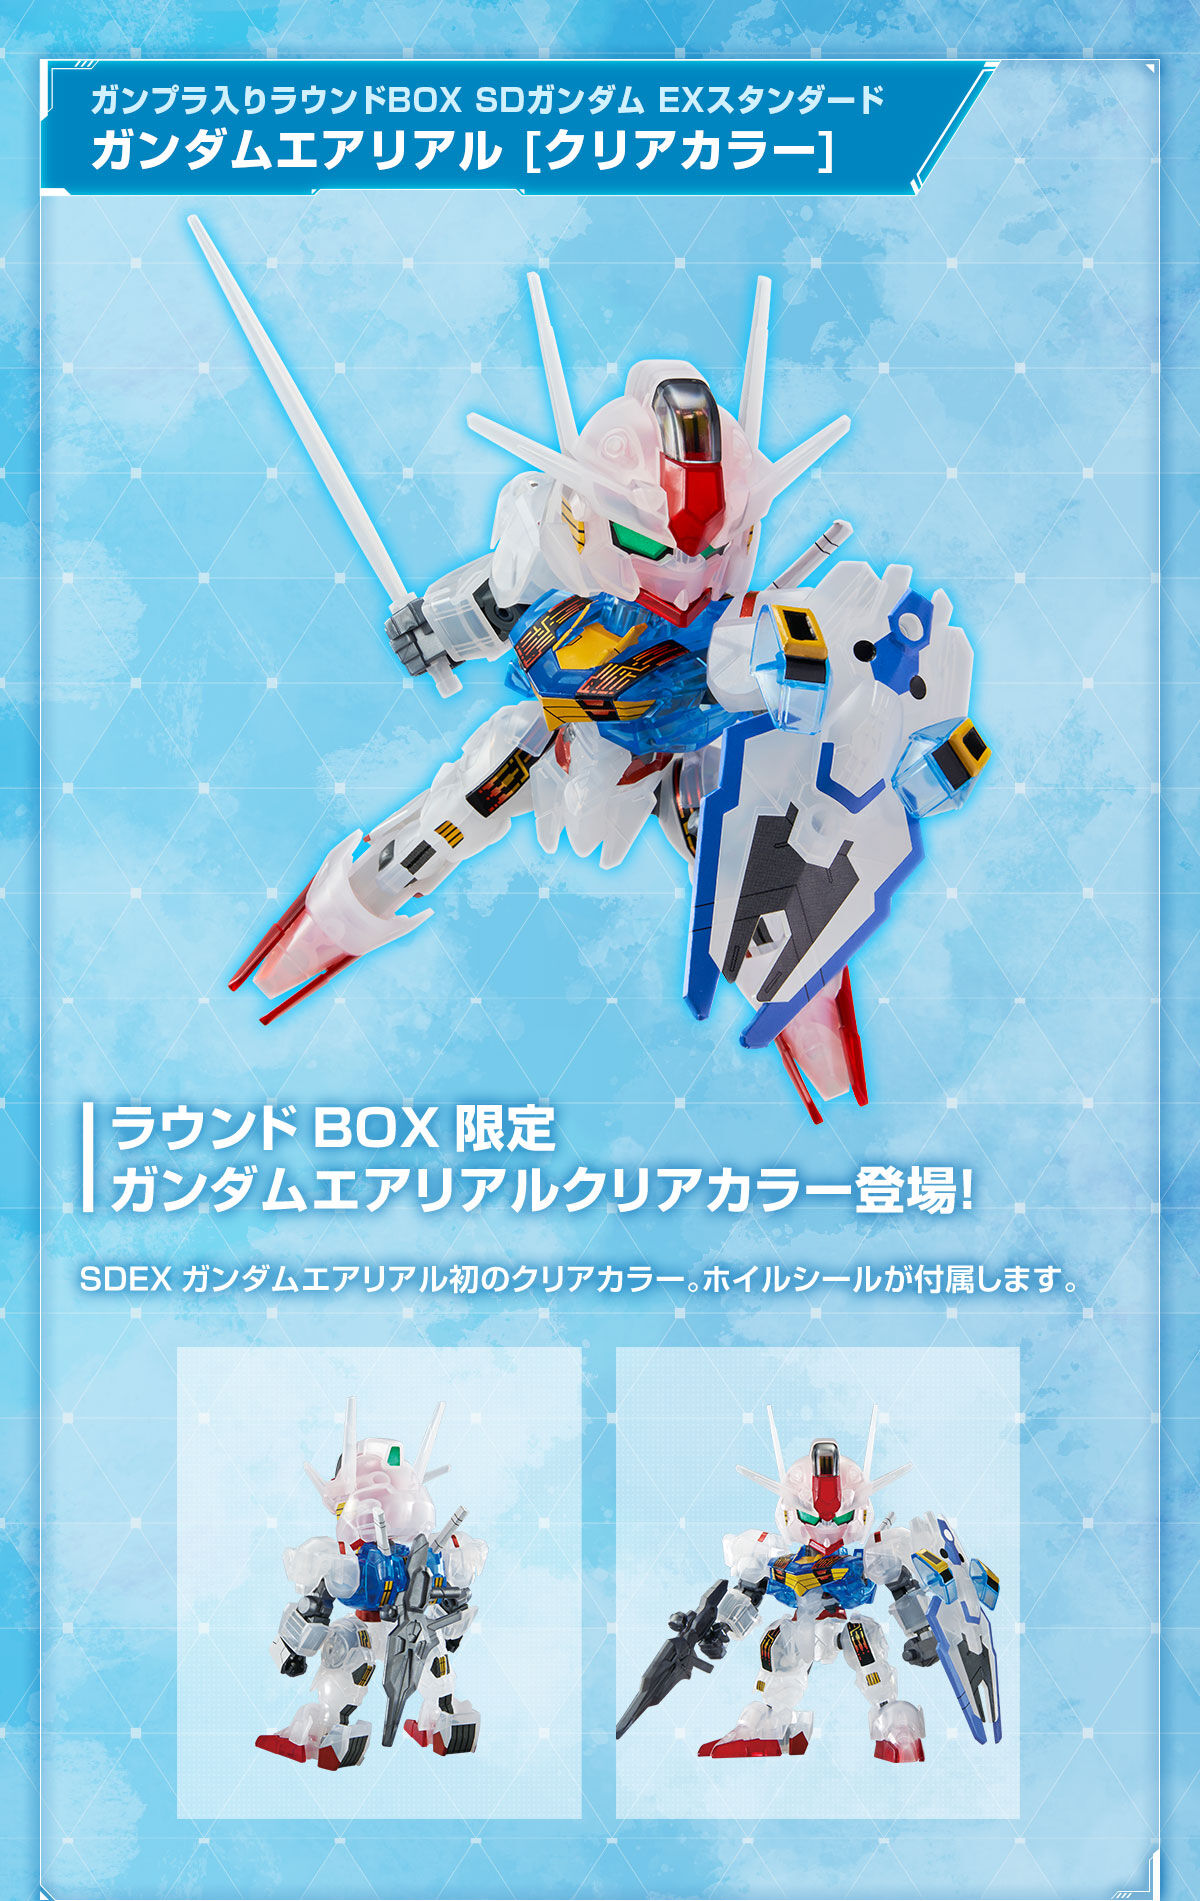 SD Gundam EX-Standard XVX-016 Gundam Aerial(Clear Color)